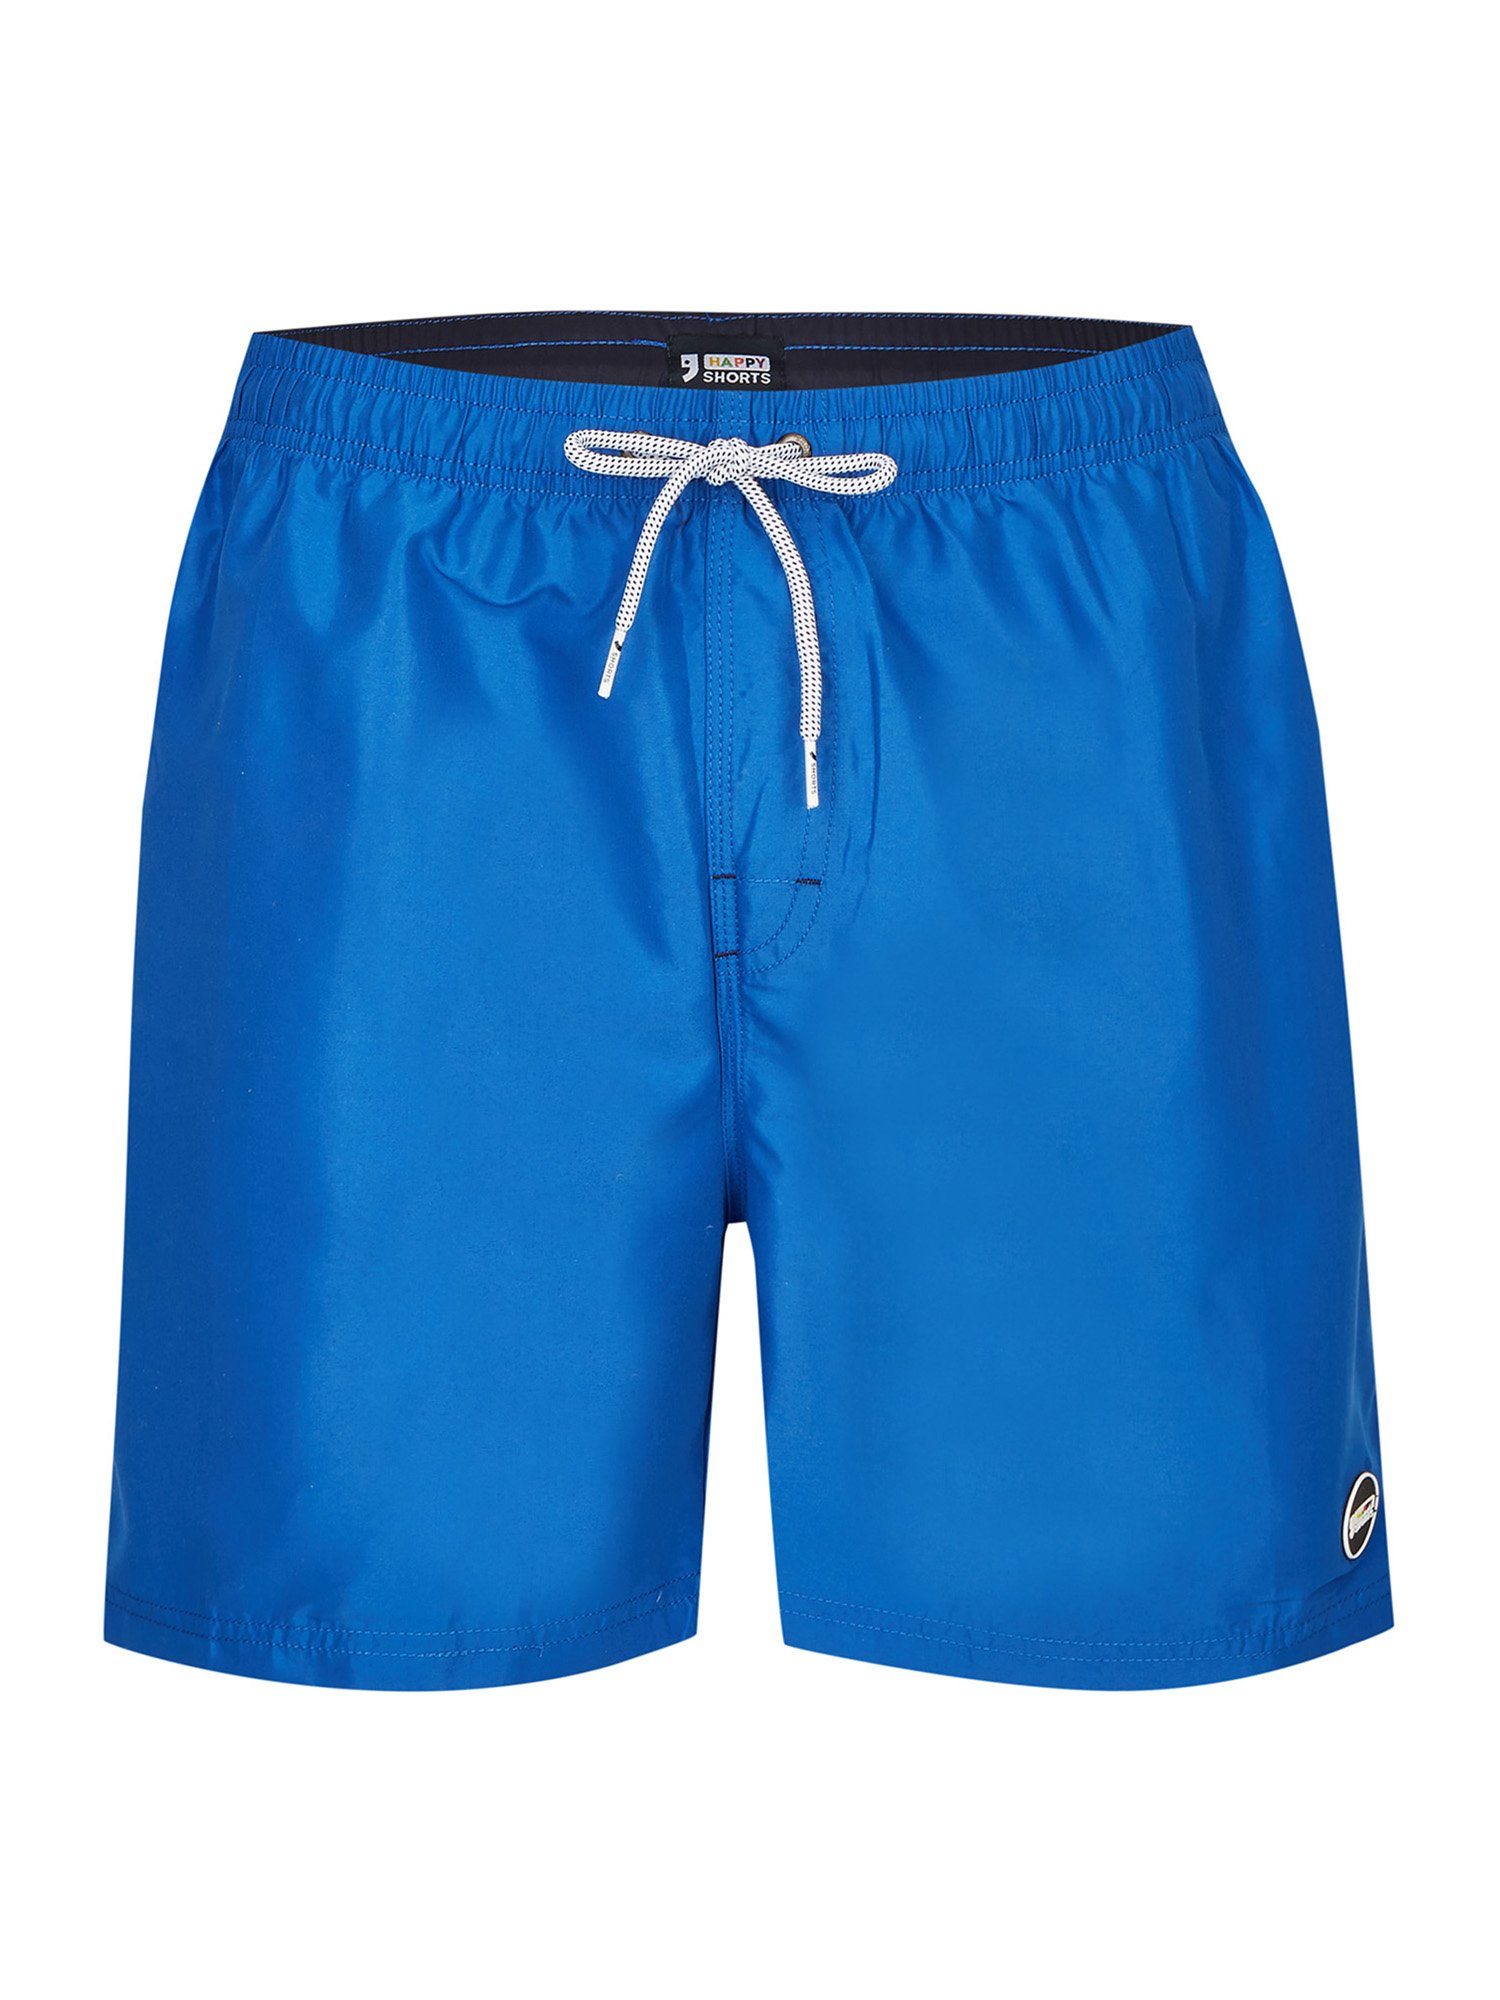 HAPPY SHORTS Badehose HAPPY SHORTS Herren Badeshorts Strandshorts Shorts  blau blue S - XXL